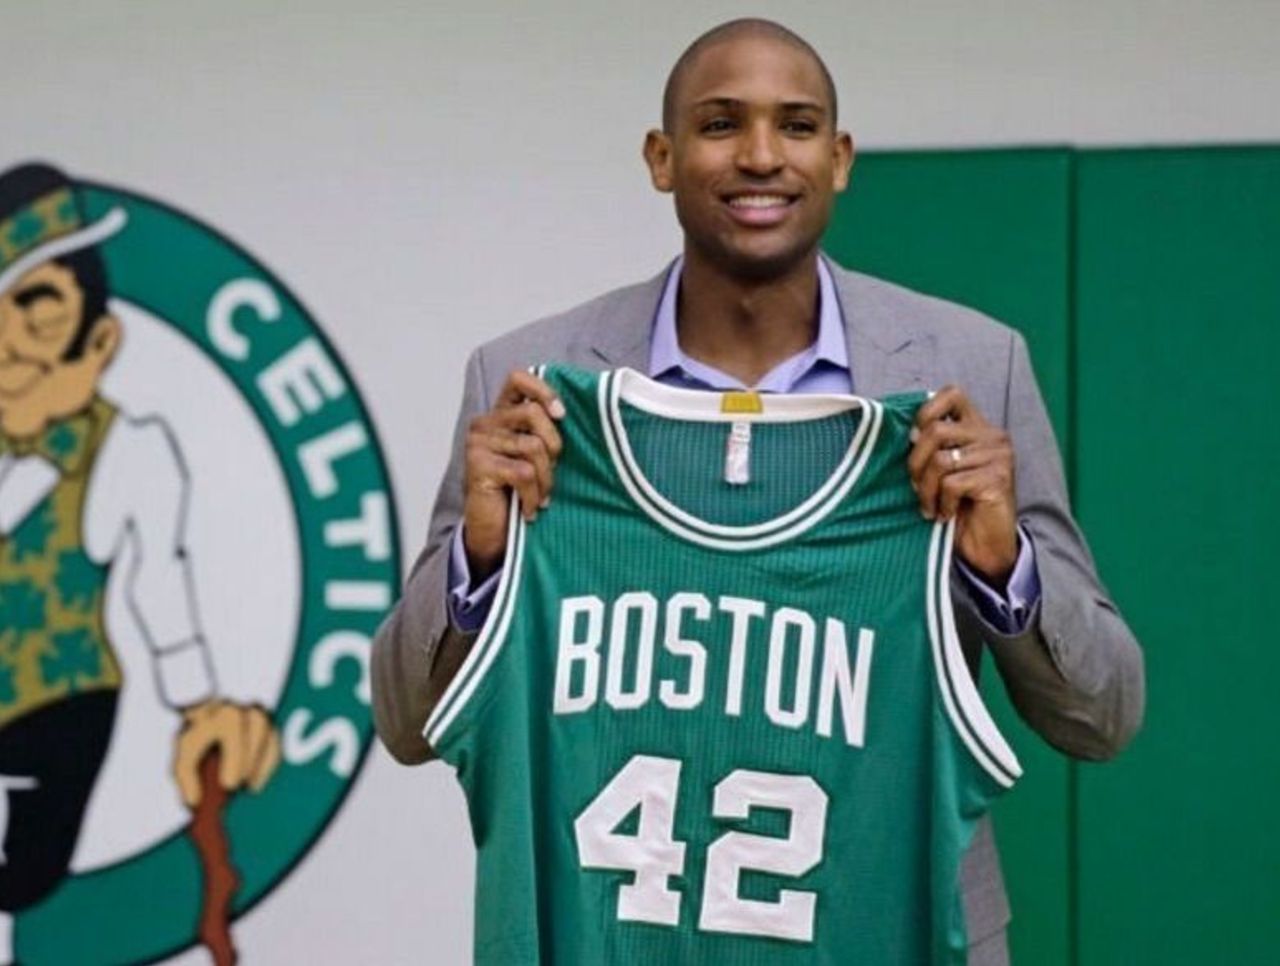 Boston Celtics Player Al Horford